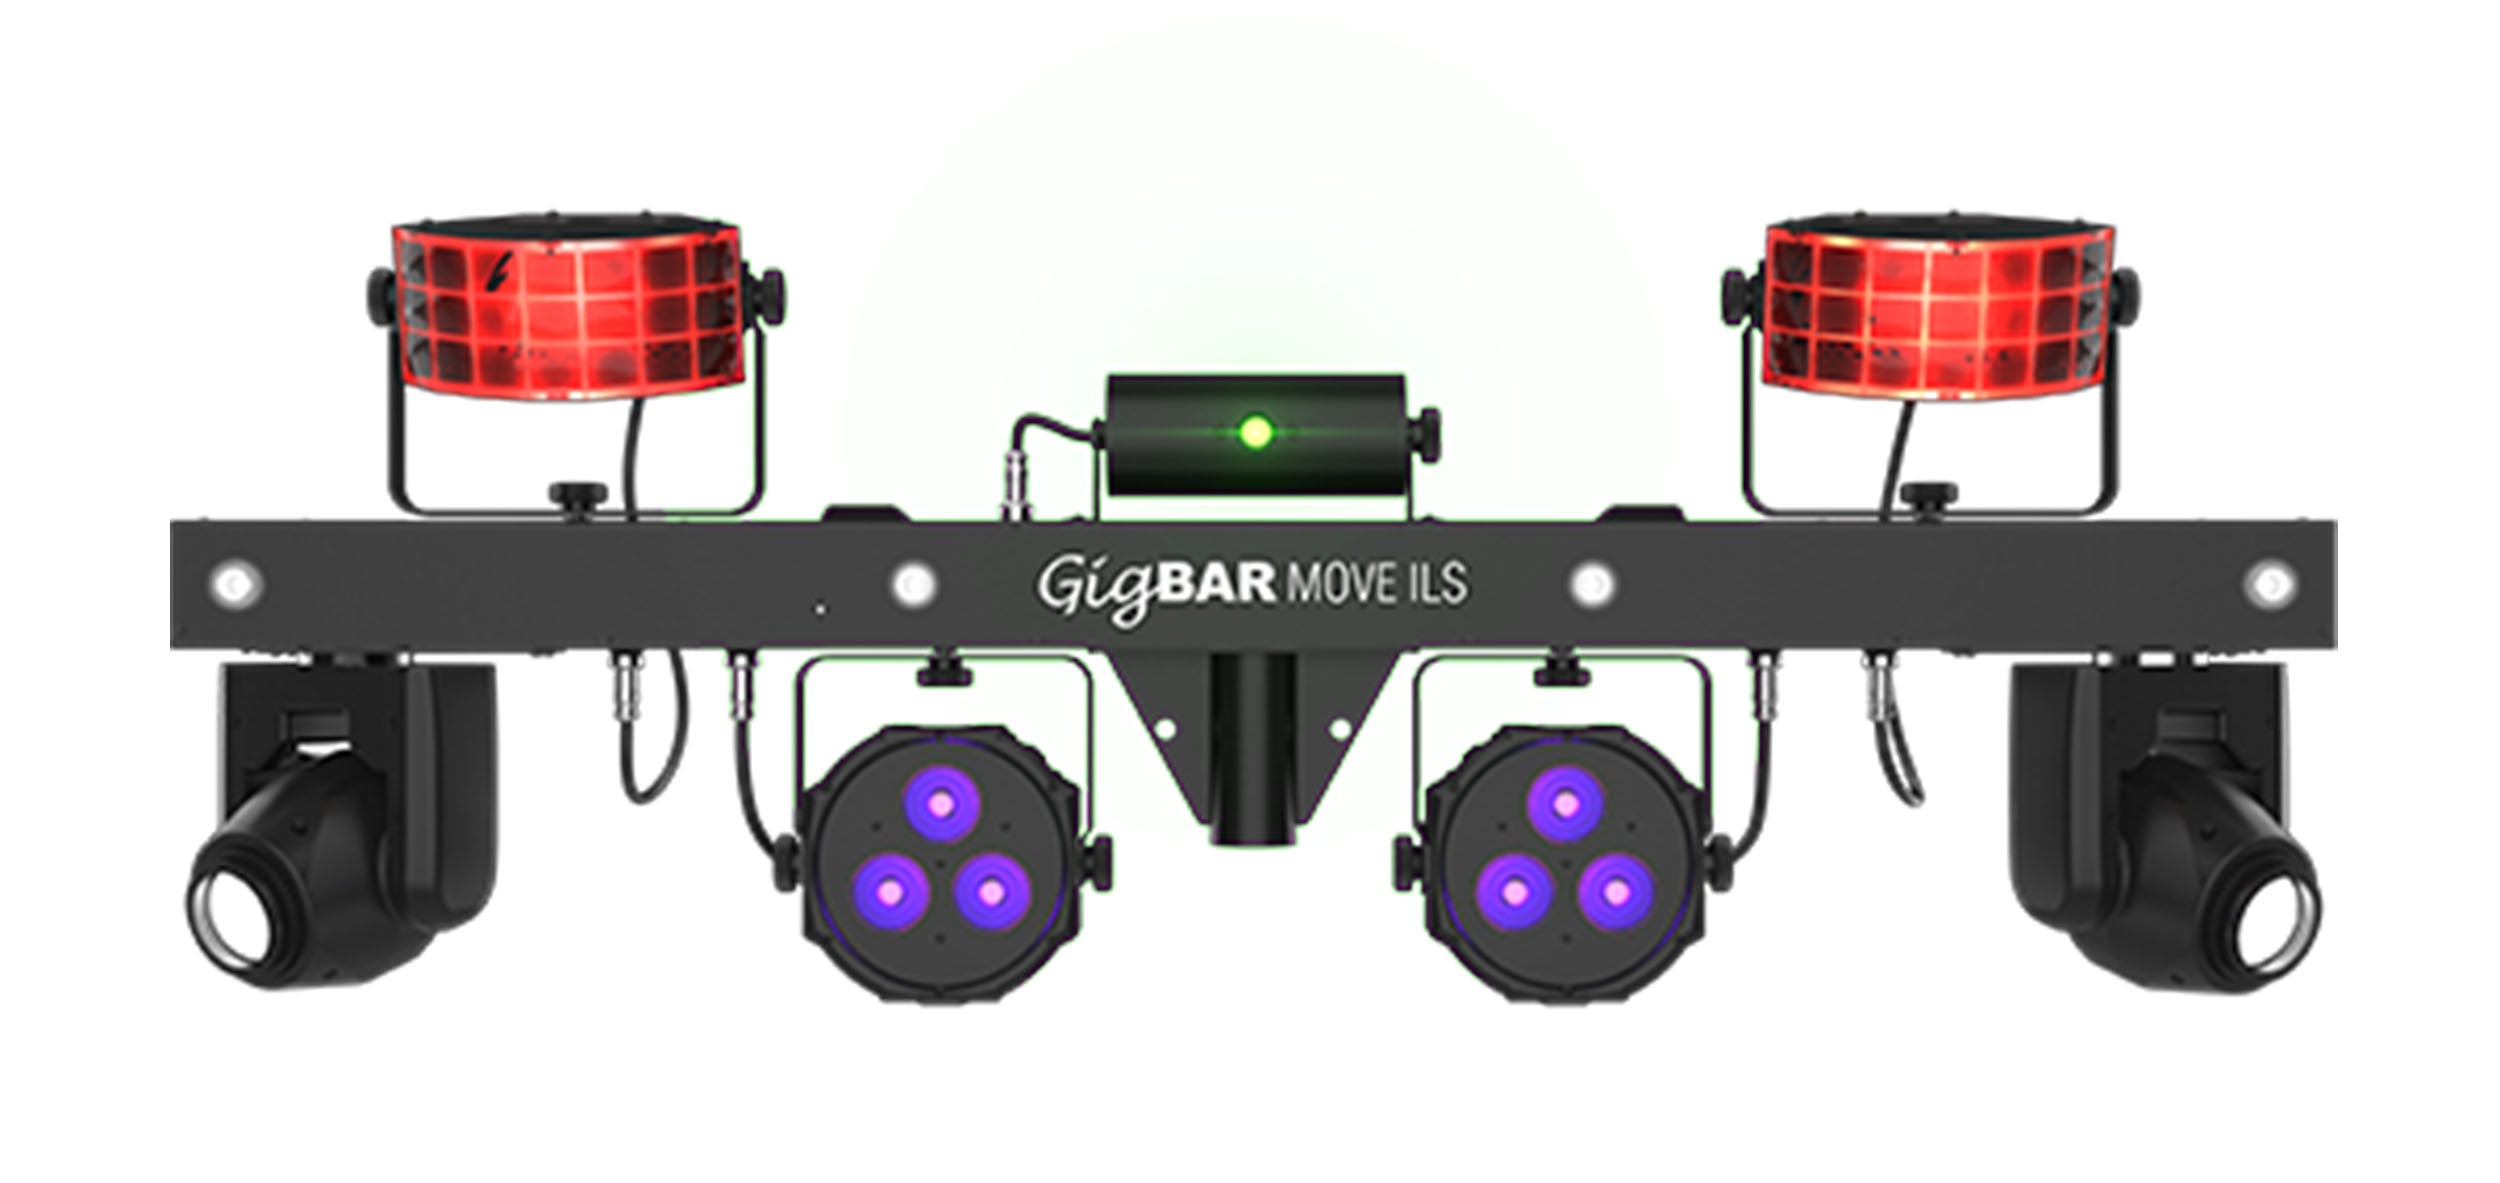 Chauvet DJ GigBAR Move ILS, Lighting System with Moving Heads - Hollywood DJ